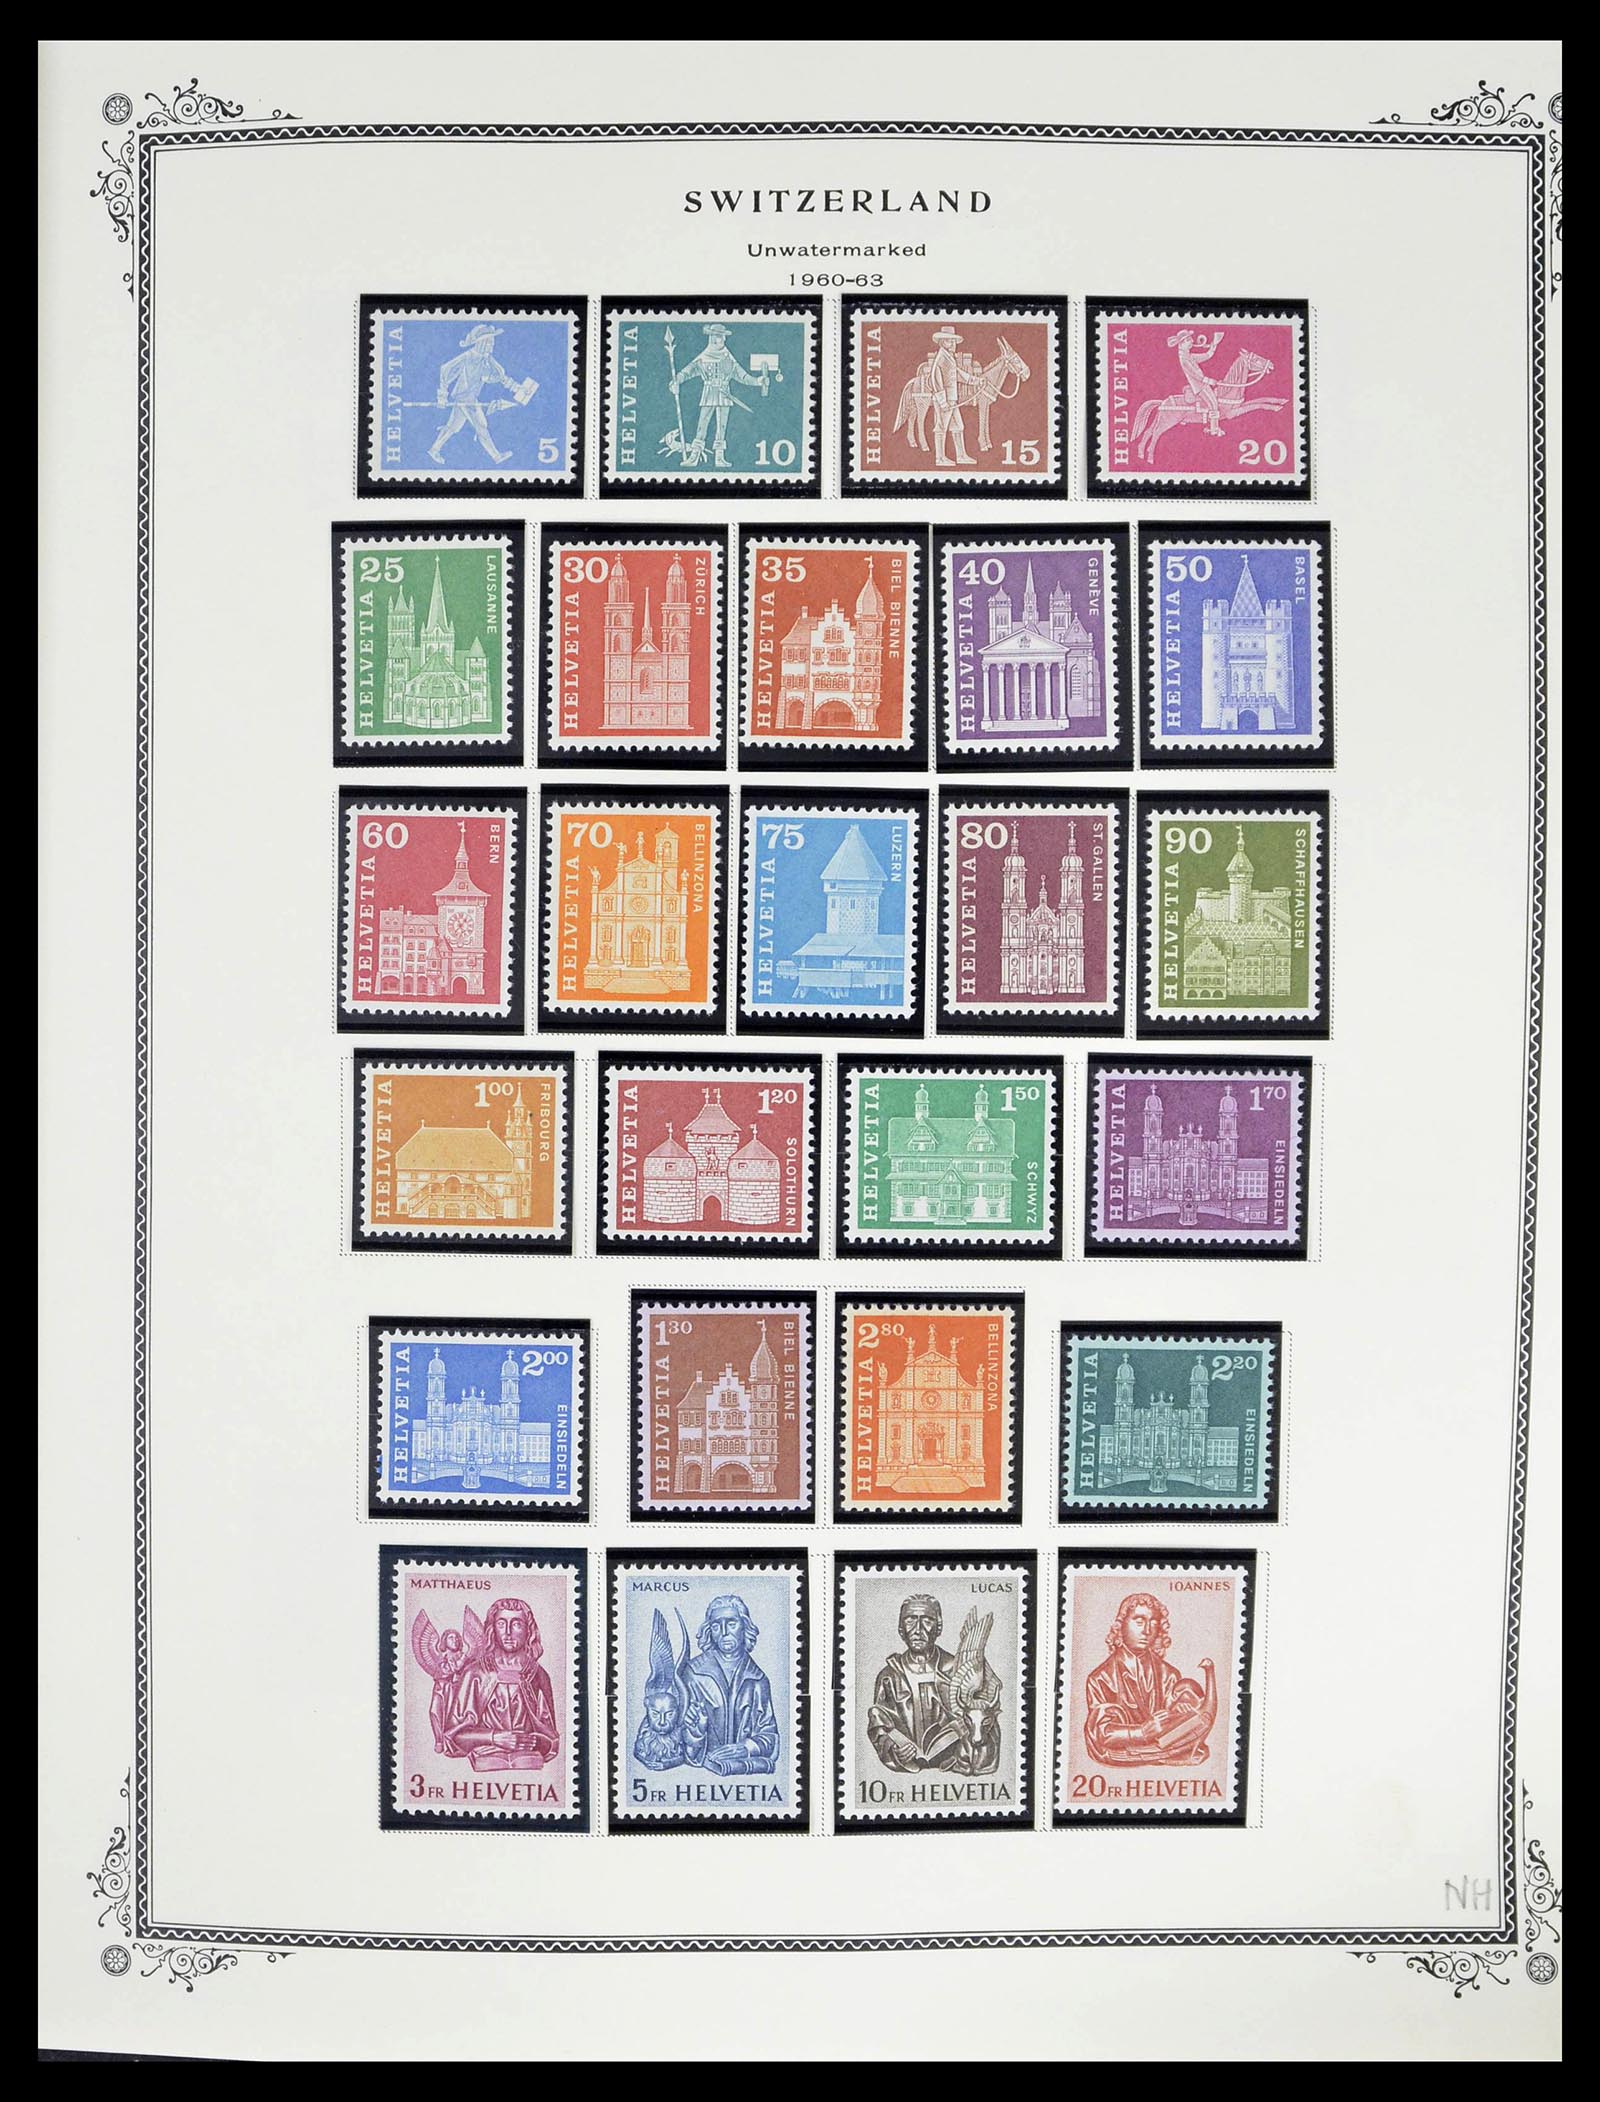 39178 0046 - Stamp collection 39178 Switzerland 1850-1989.